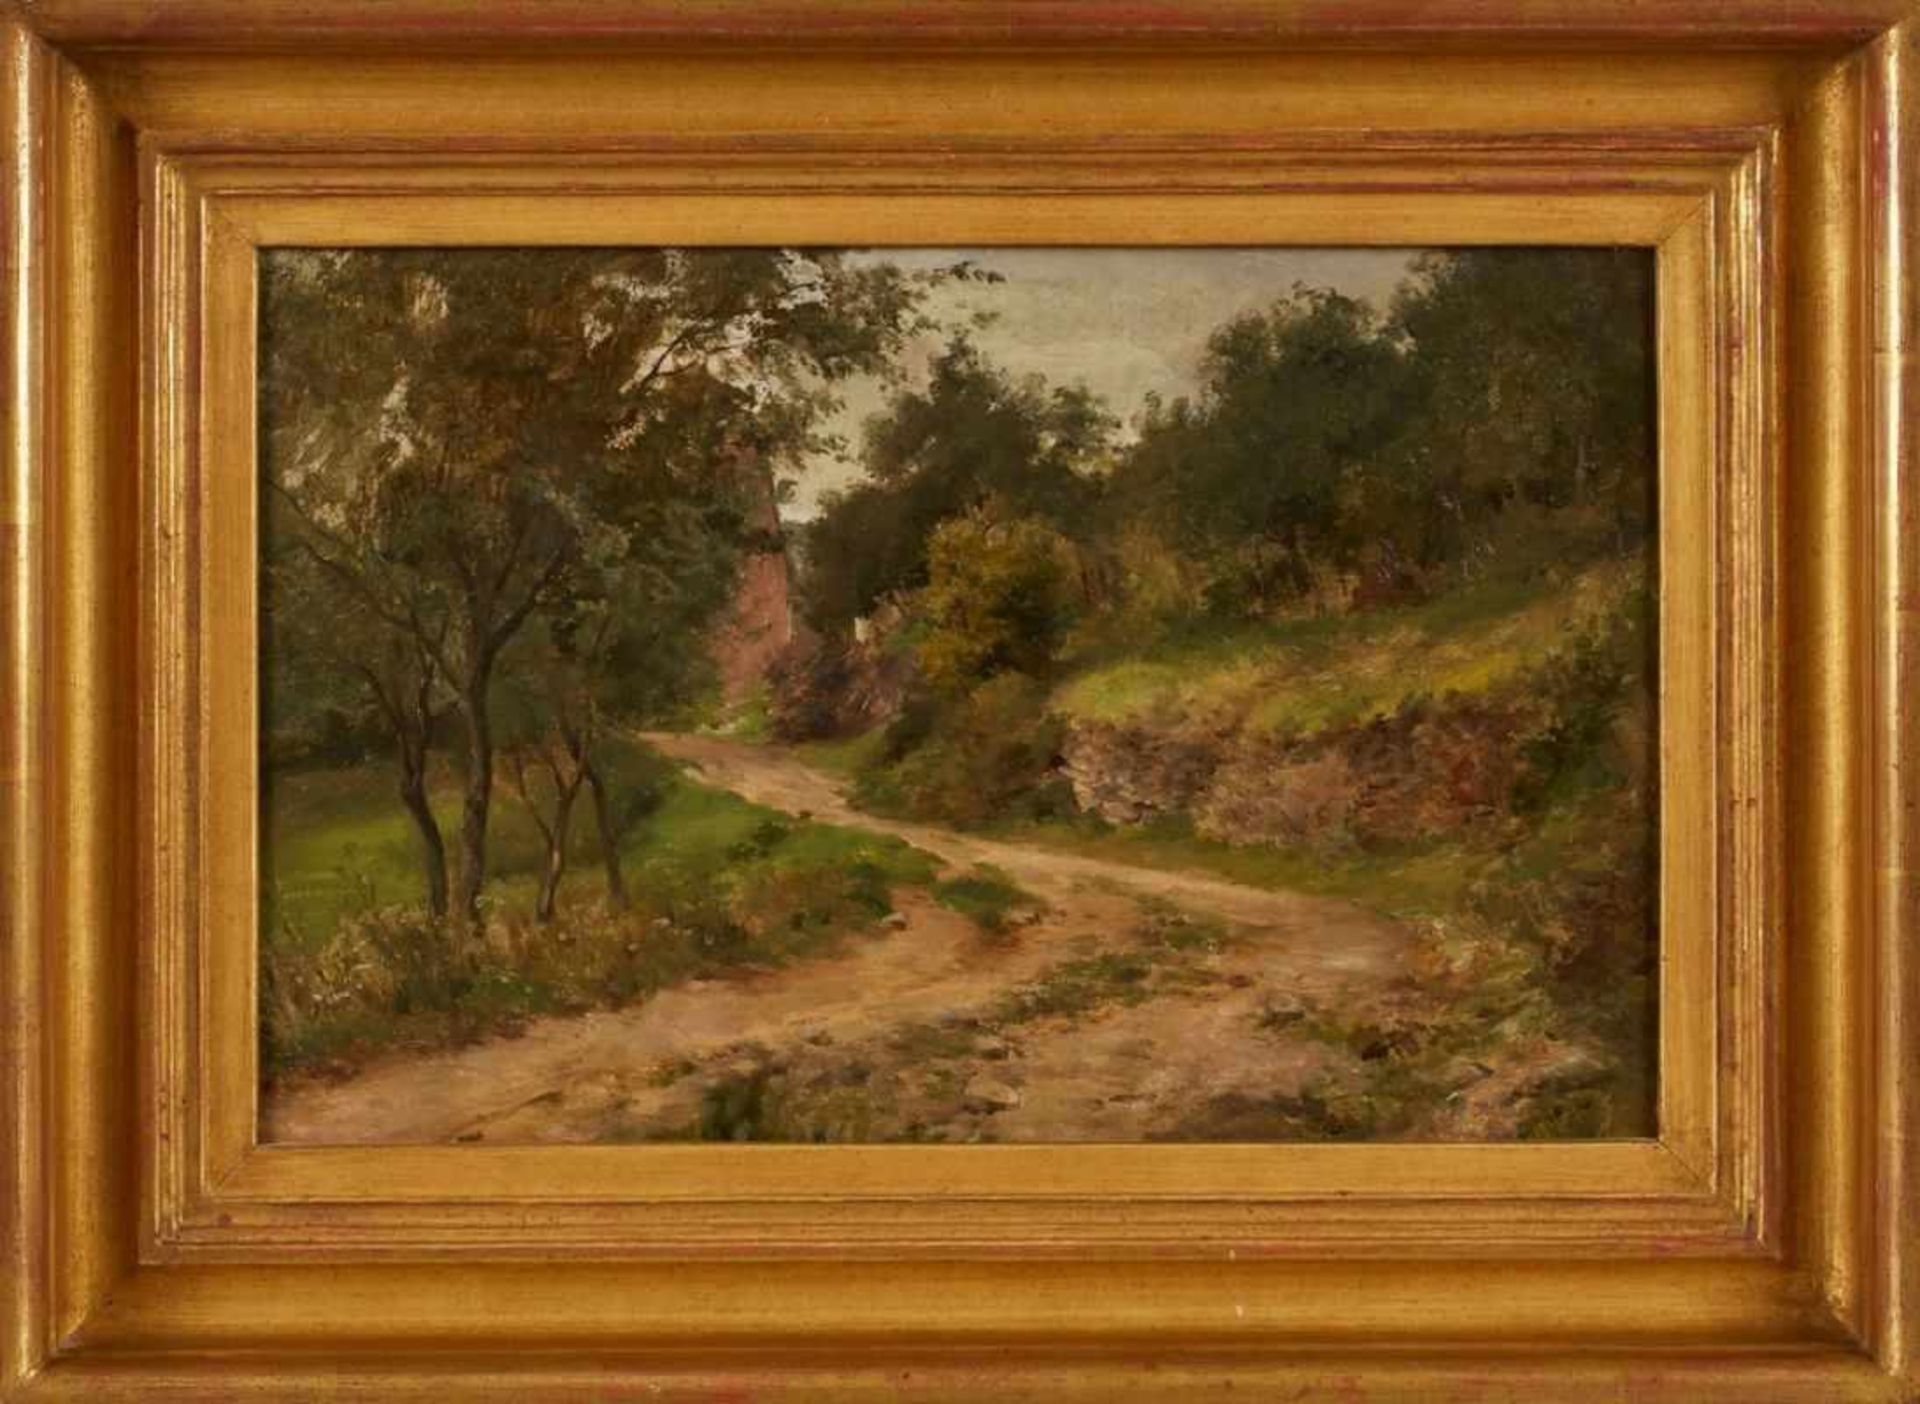 Gemälde Adolf Hoeffler1925 Frankfurt - 1898 Frankfurt Frankfurter Landschaftsmaler. Schüler seines